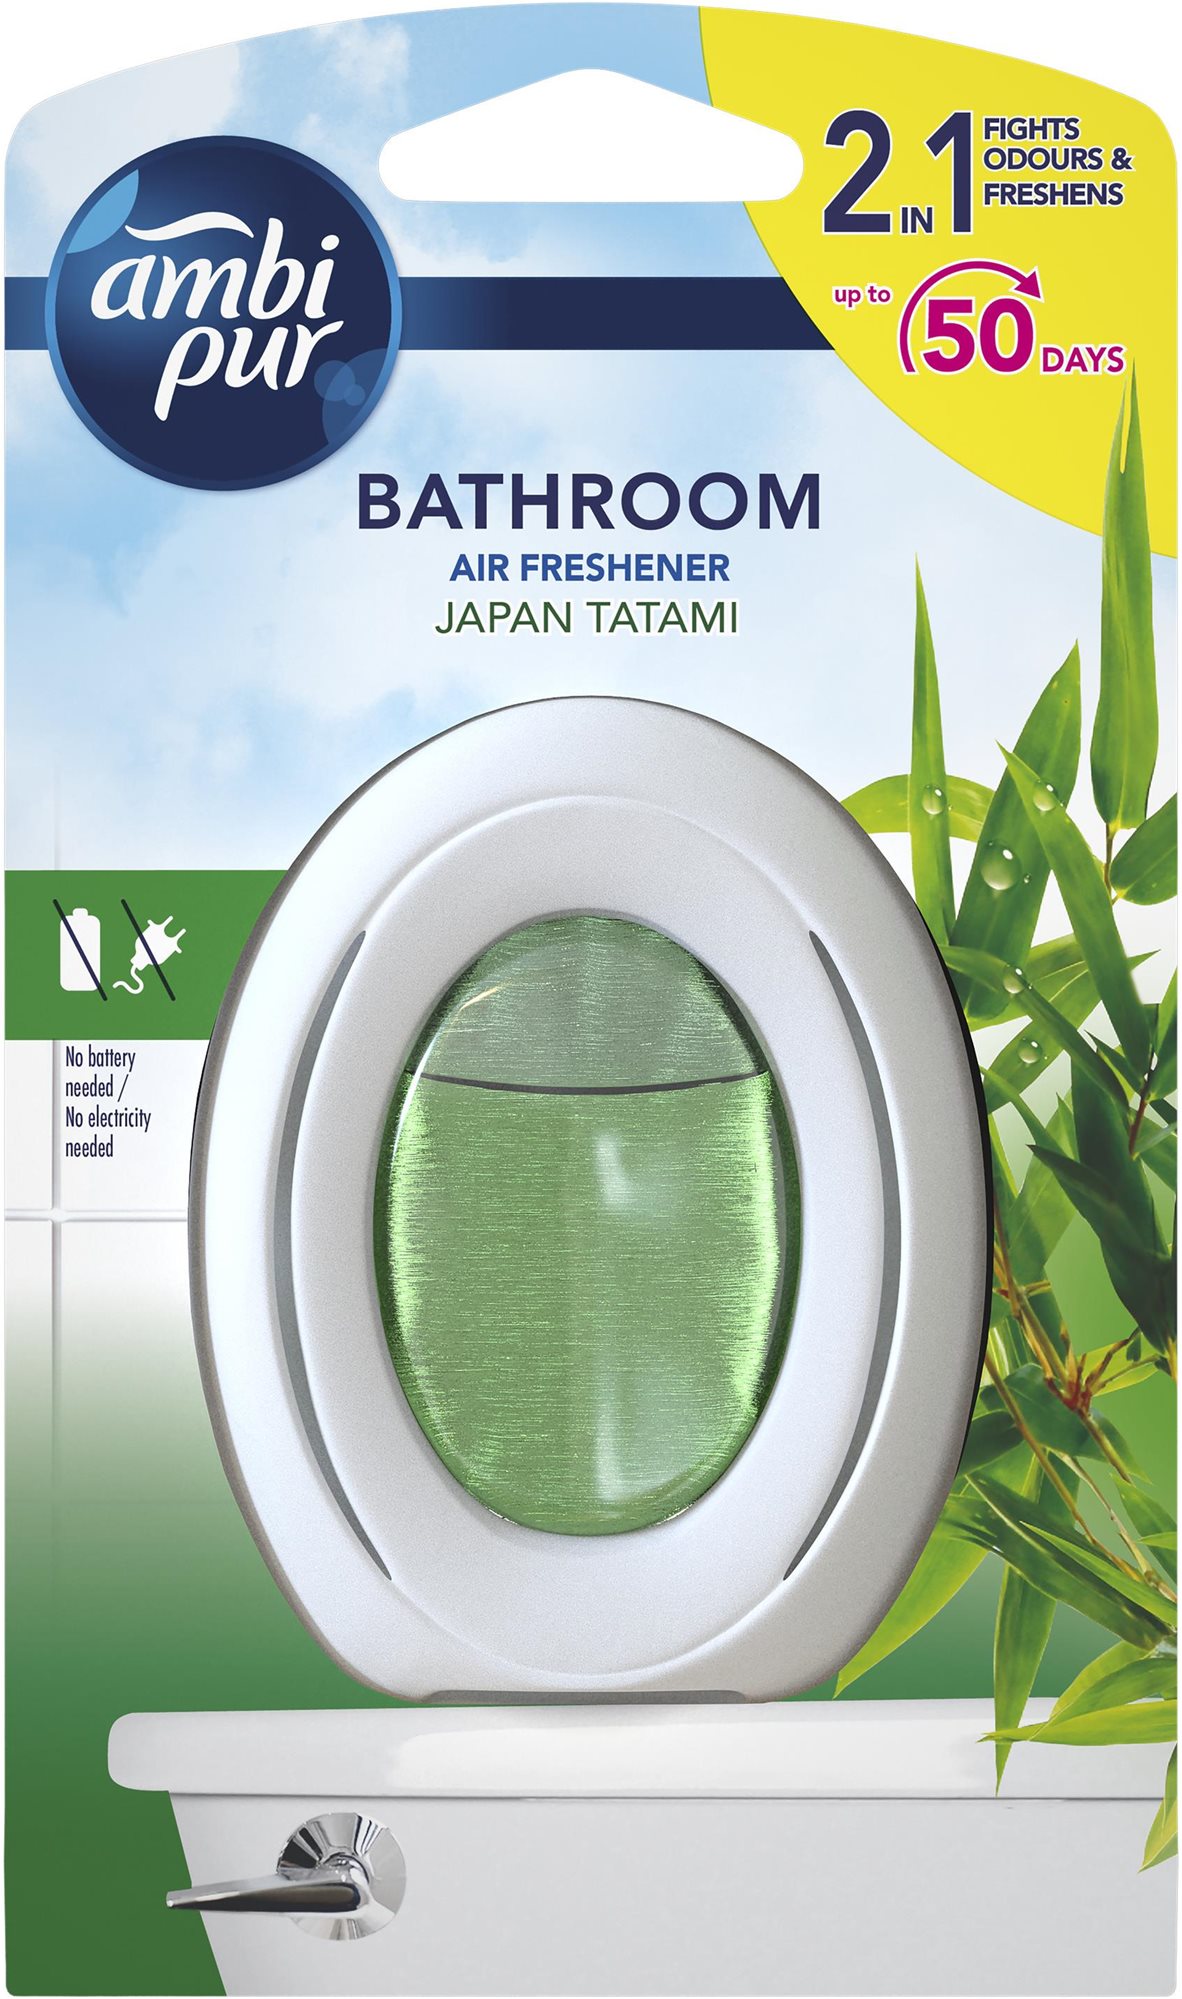 Légfrissítő AMBI PUR Bathroom Japan Tatami 7